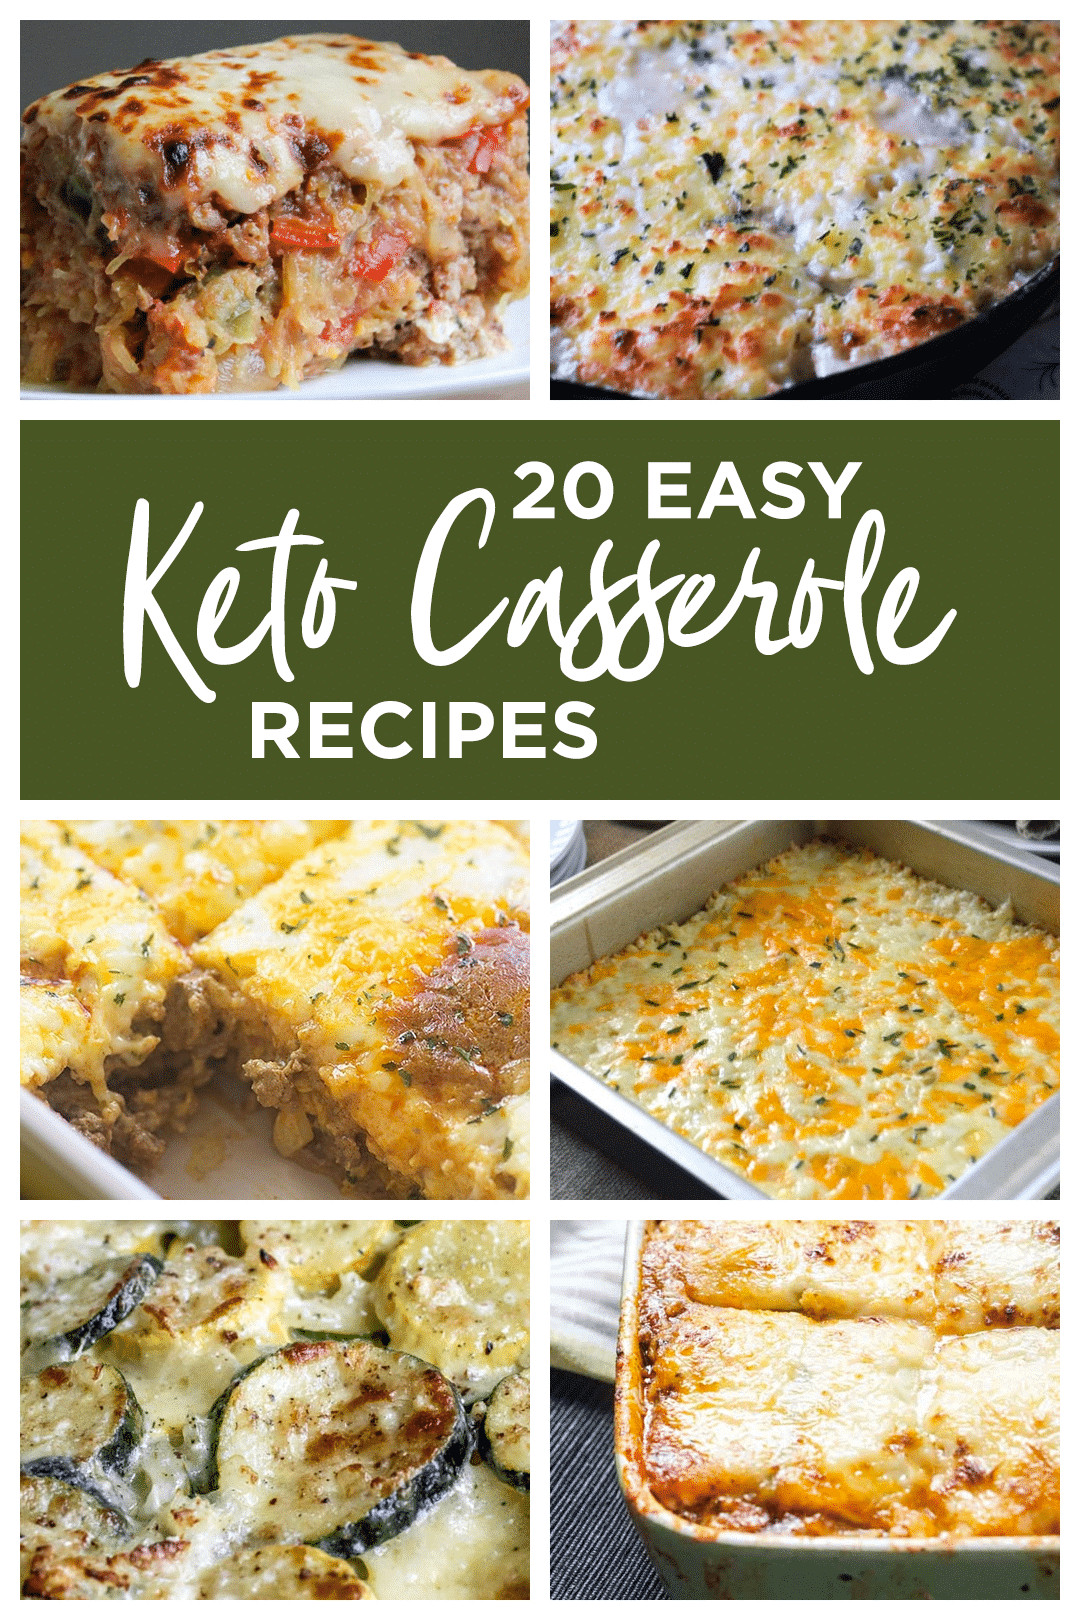 Keto Dinner Casserole
 20 Easy Keto Casserole Recipes low carb friendly